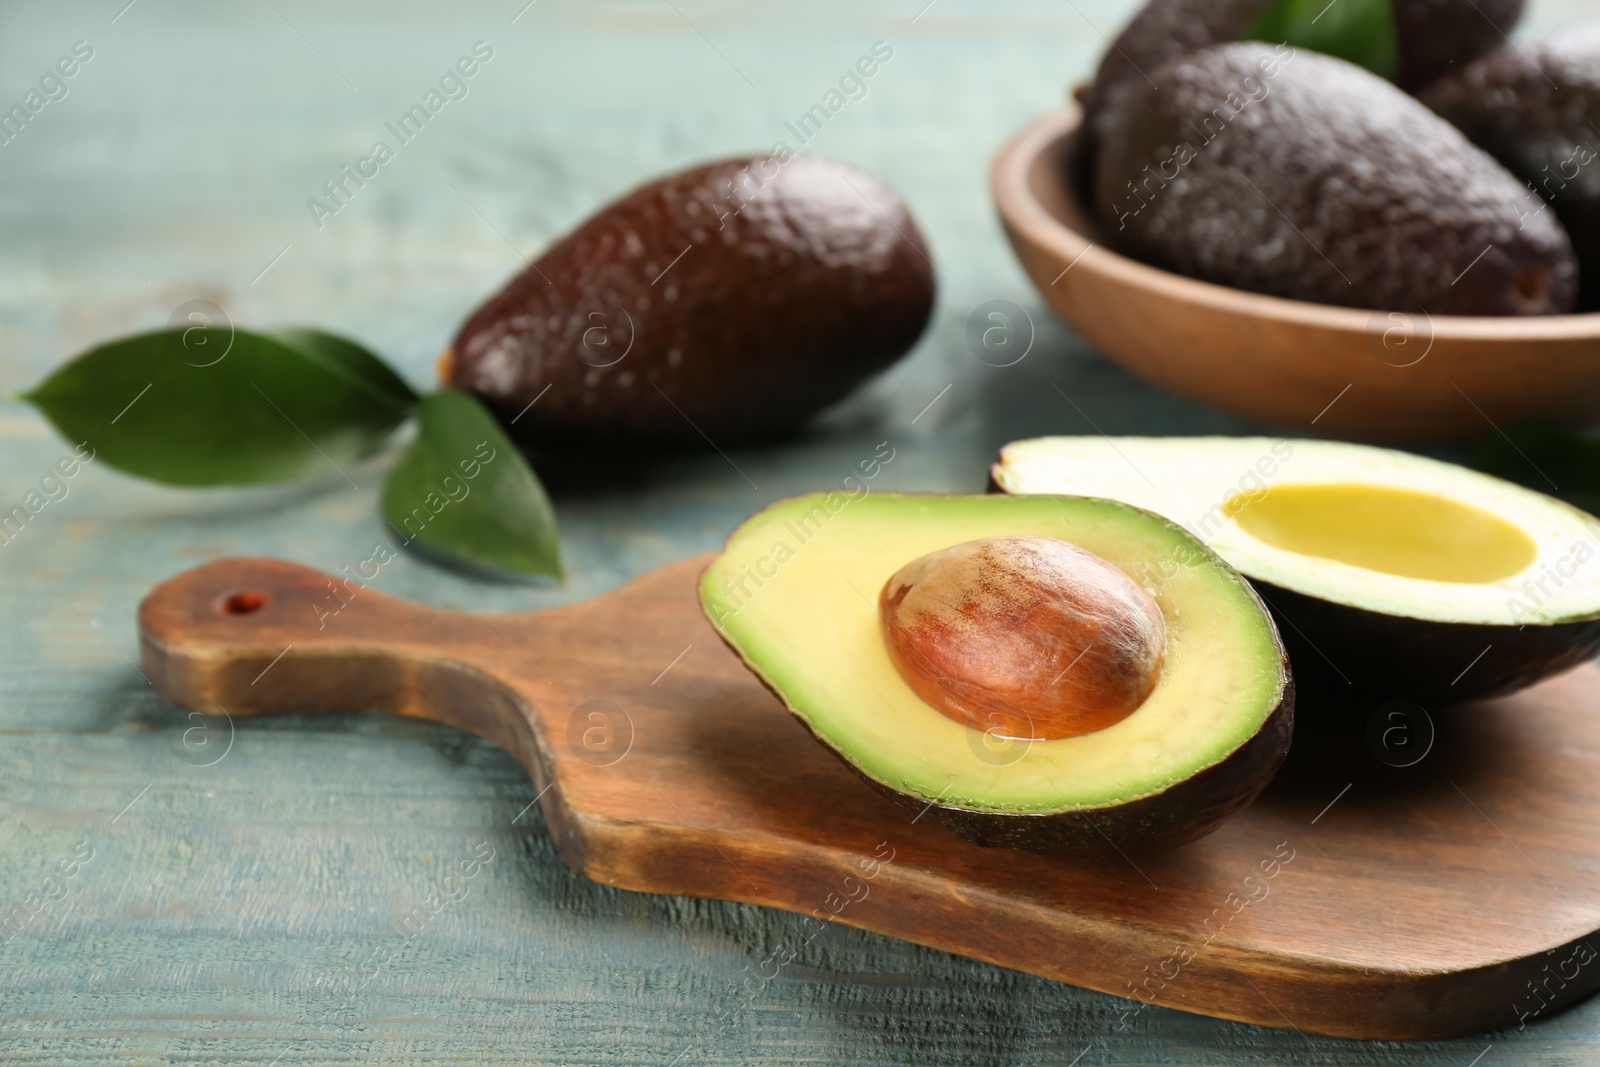 Photo of Cut ripe avocado on light blue wooden table, closeup